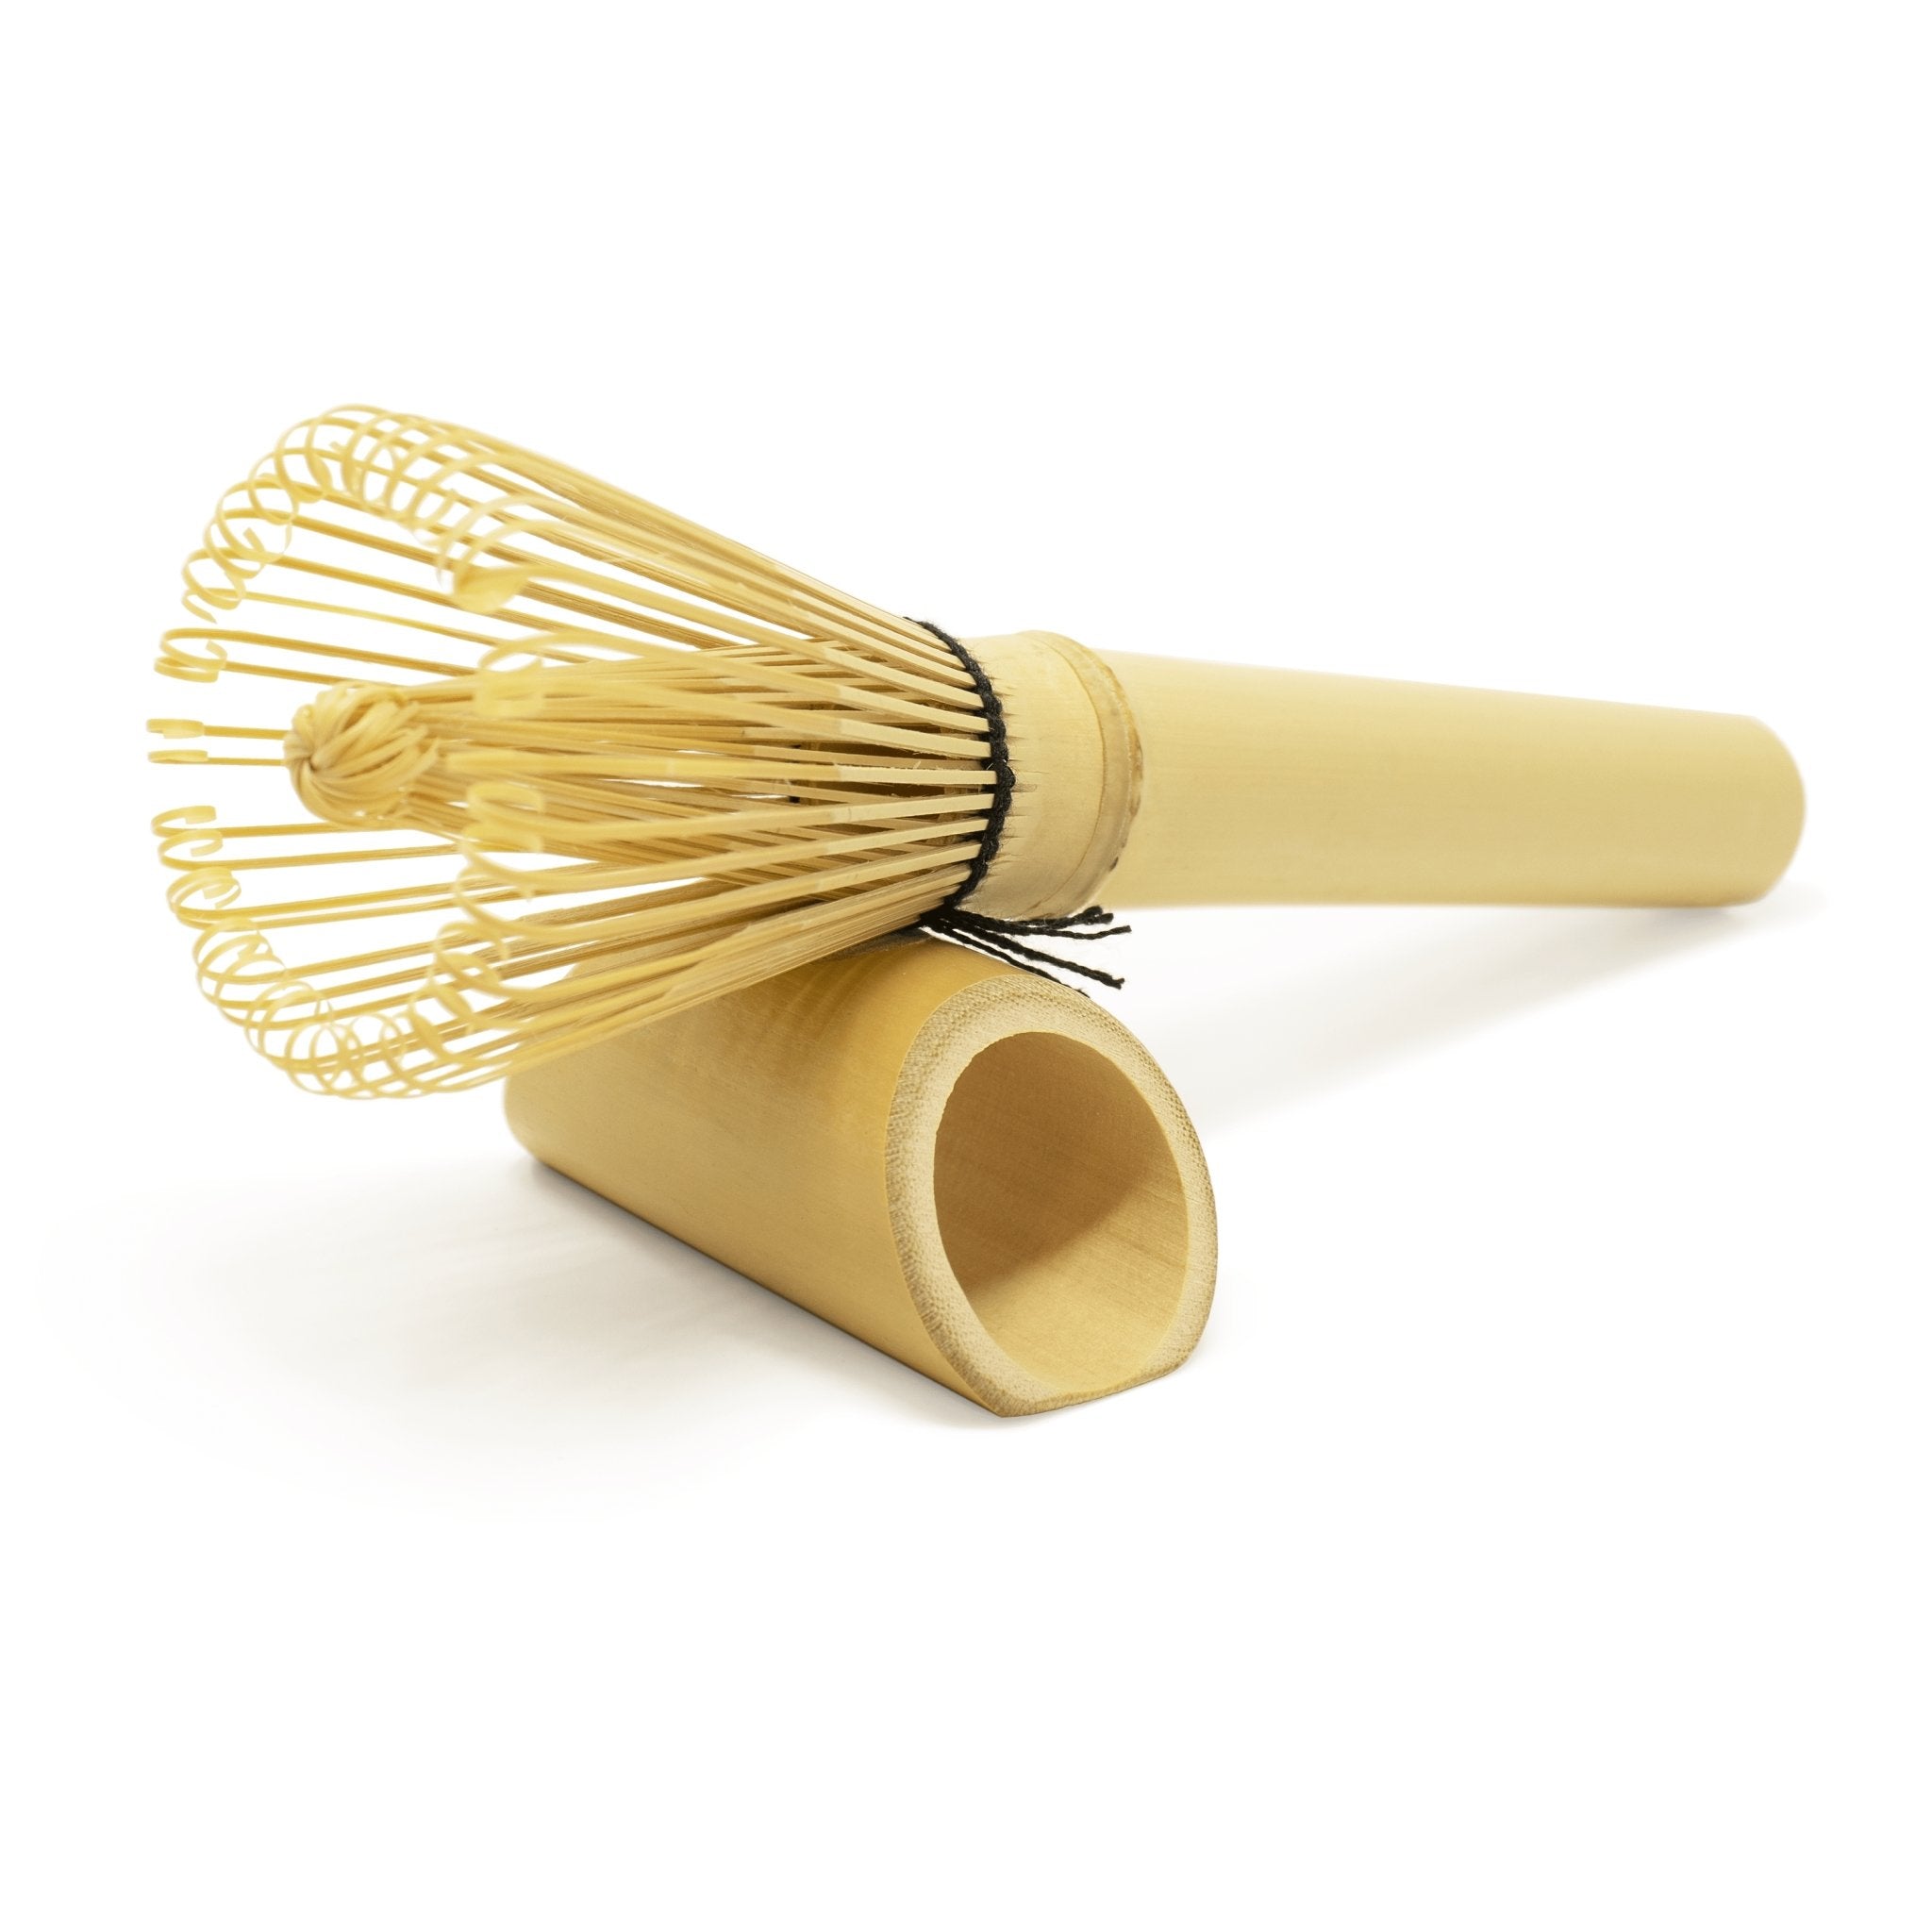 Japanese Bamboo Matcha Whisk for Organic Matcha